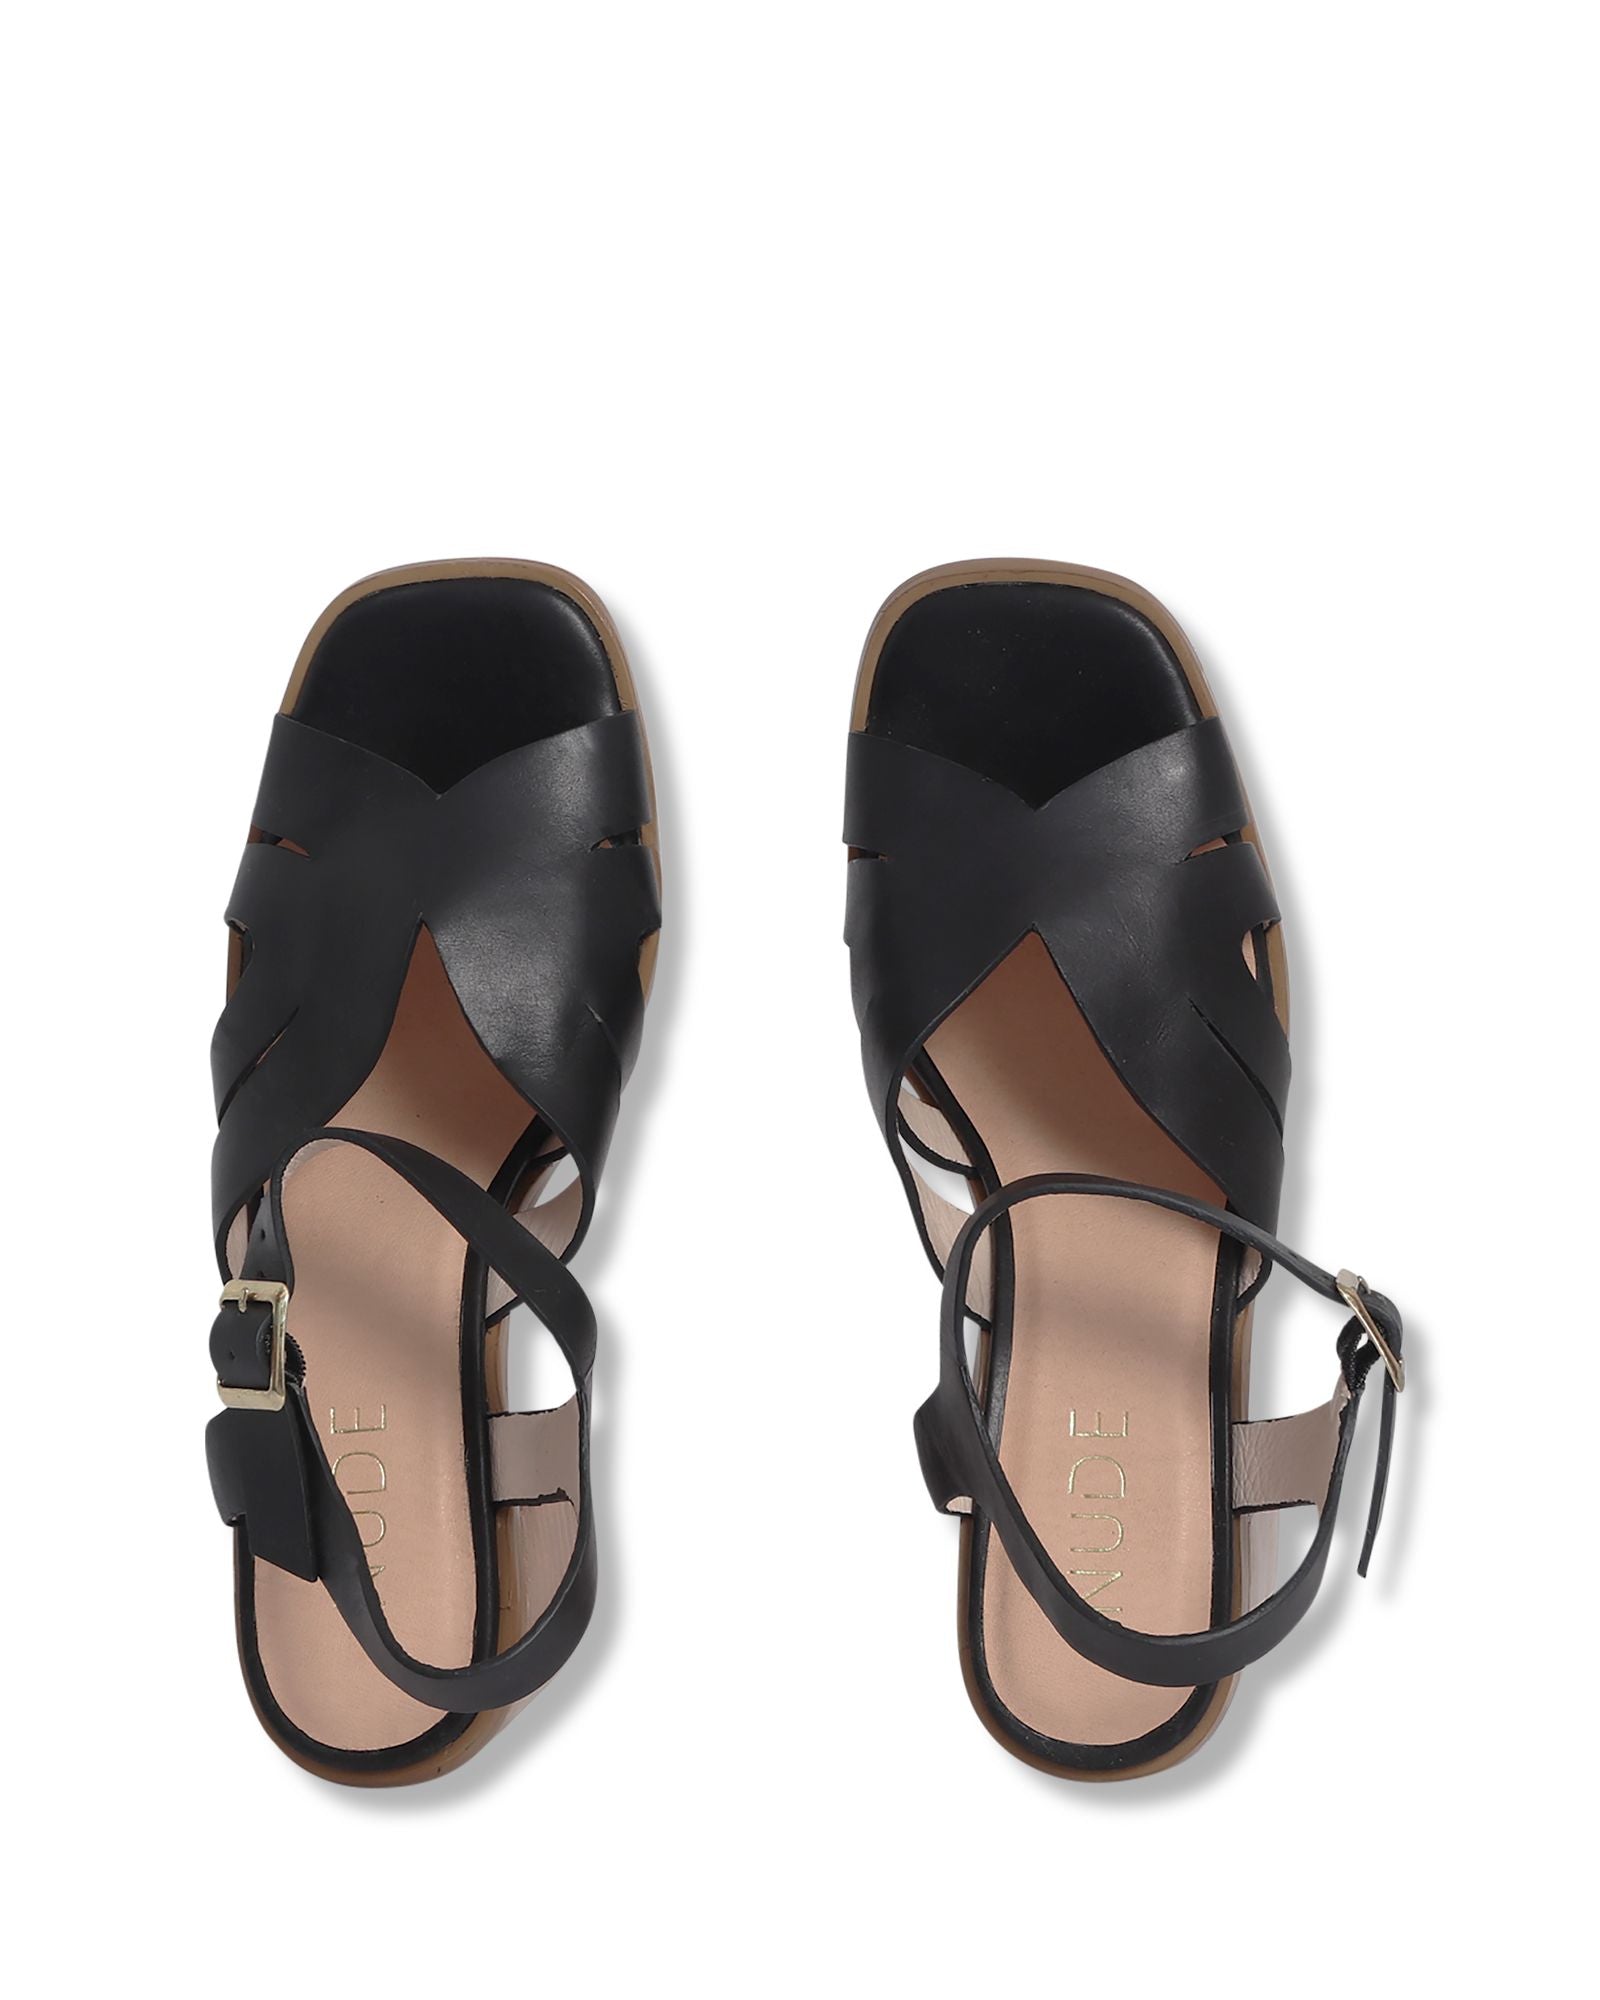 LENA BLOCK HEEL - NUDE FOOTWEAR - BF, womens footwear - Stomp Shoes Darwin